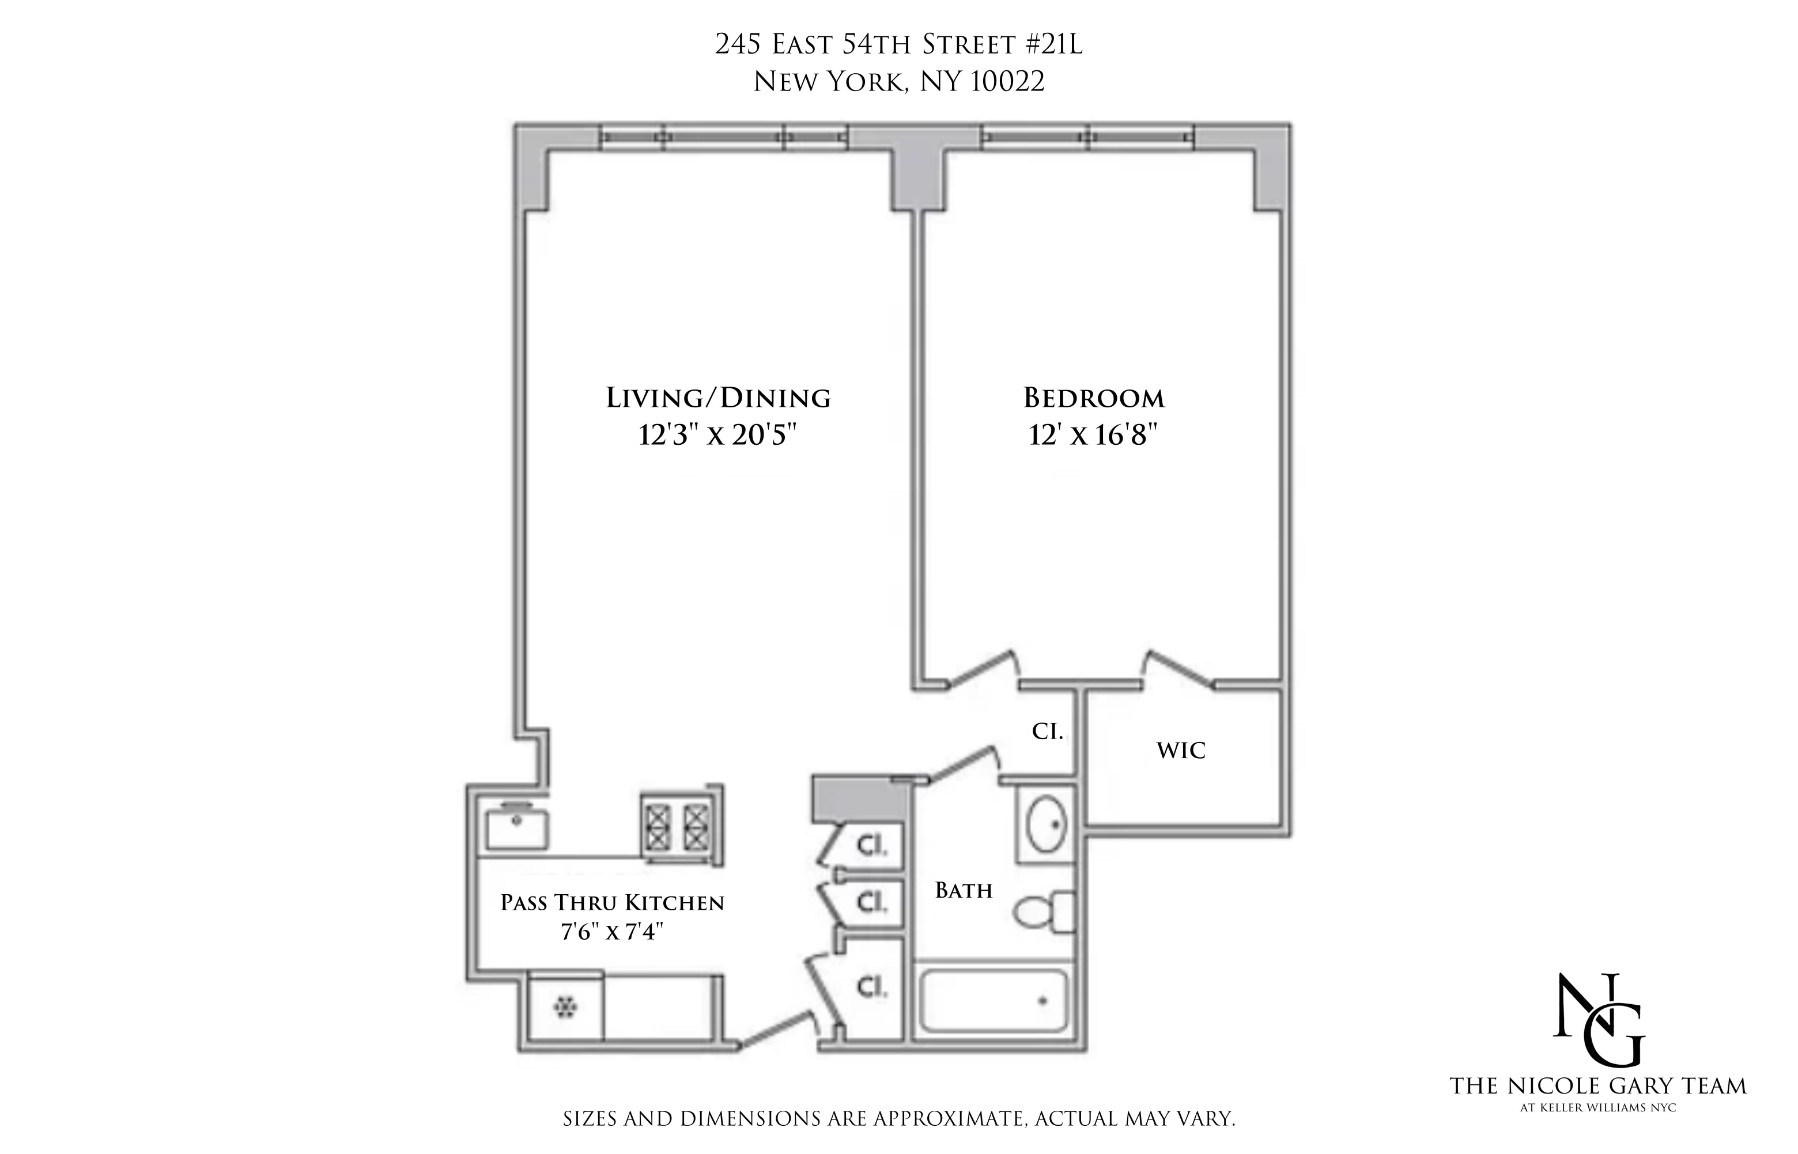 Floorplan for 245 East 54th Street, 21L